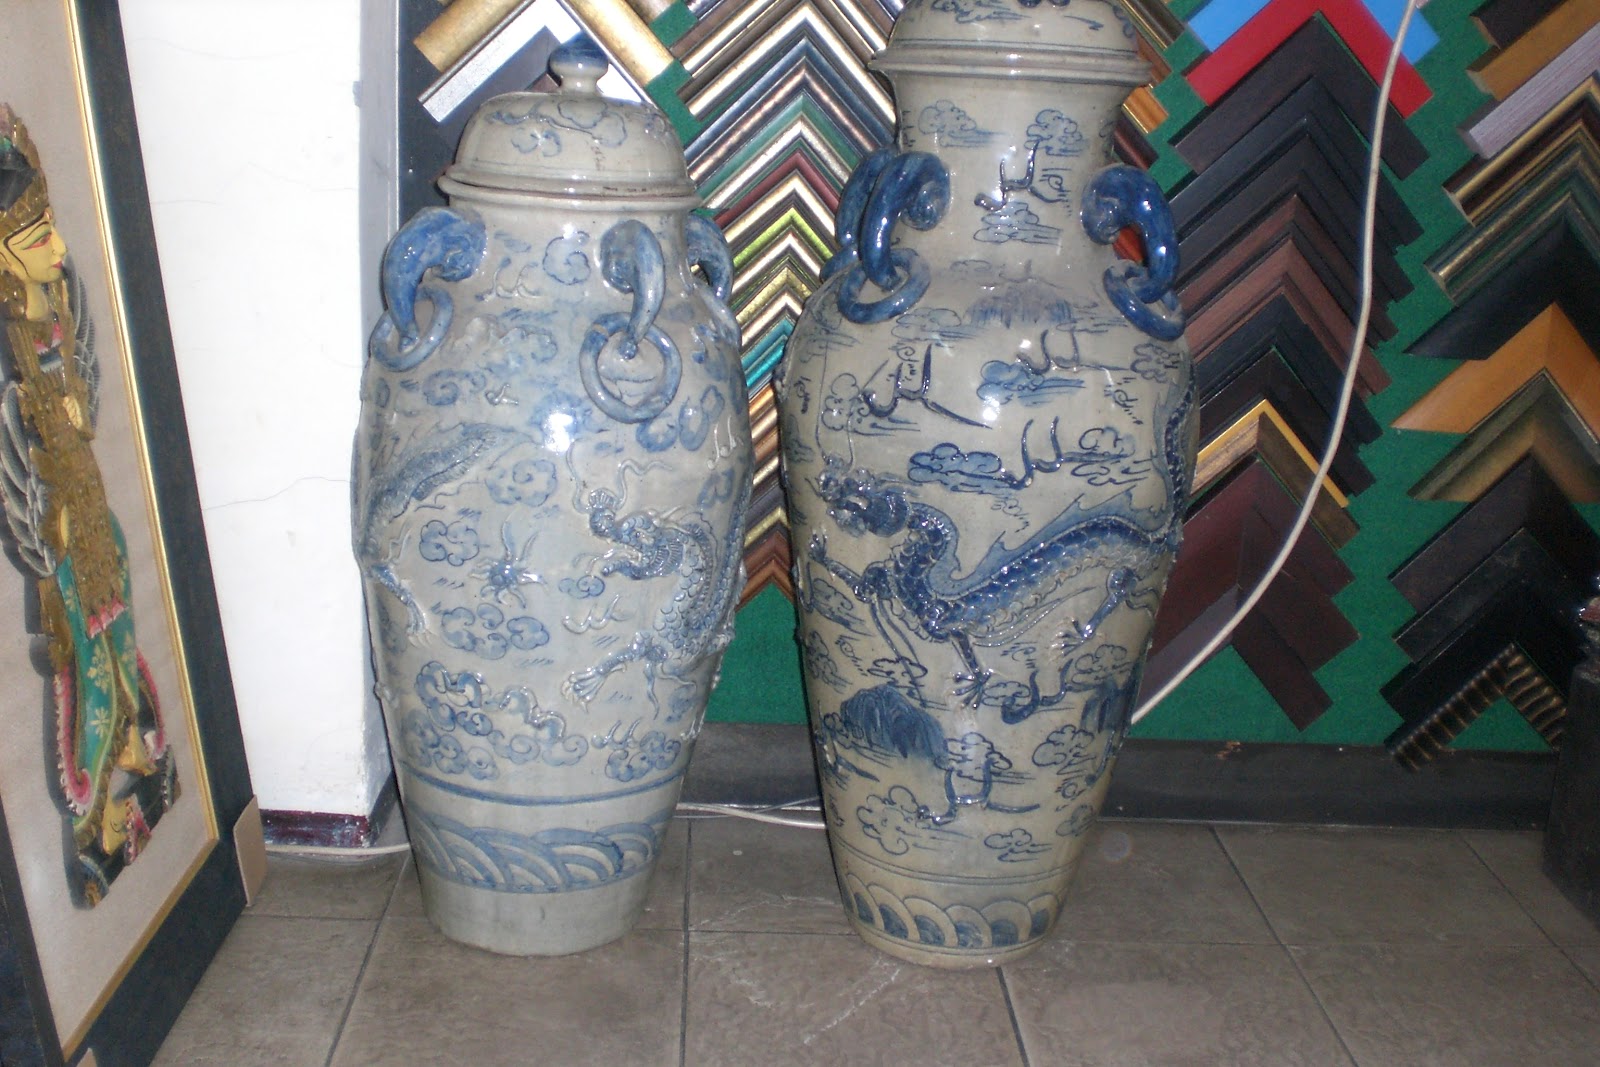  Guci  keramik  antik Blog  Batik